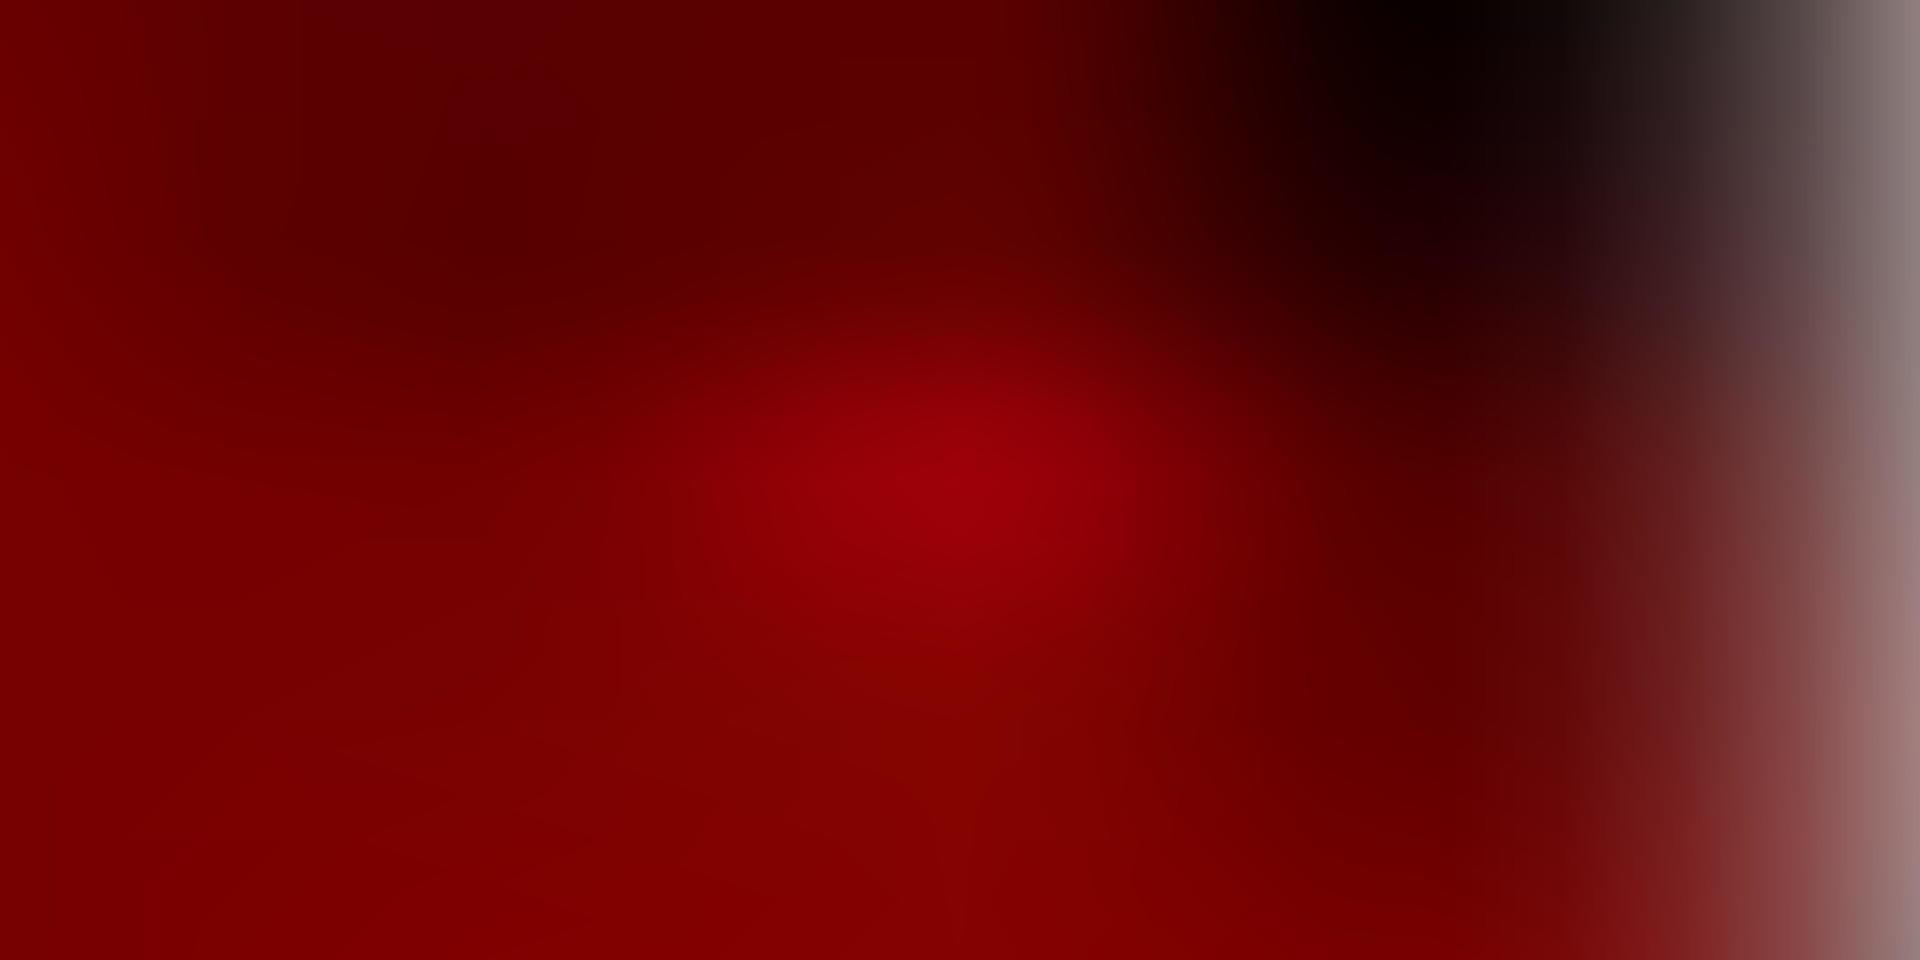 hellrosa, rote Vektorunschärfevorlage. vektor